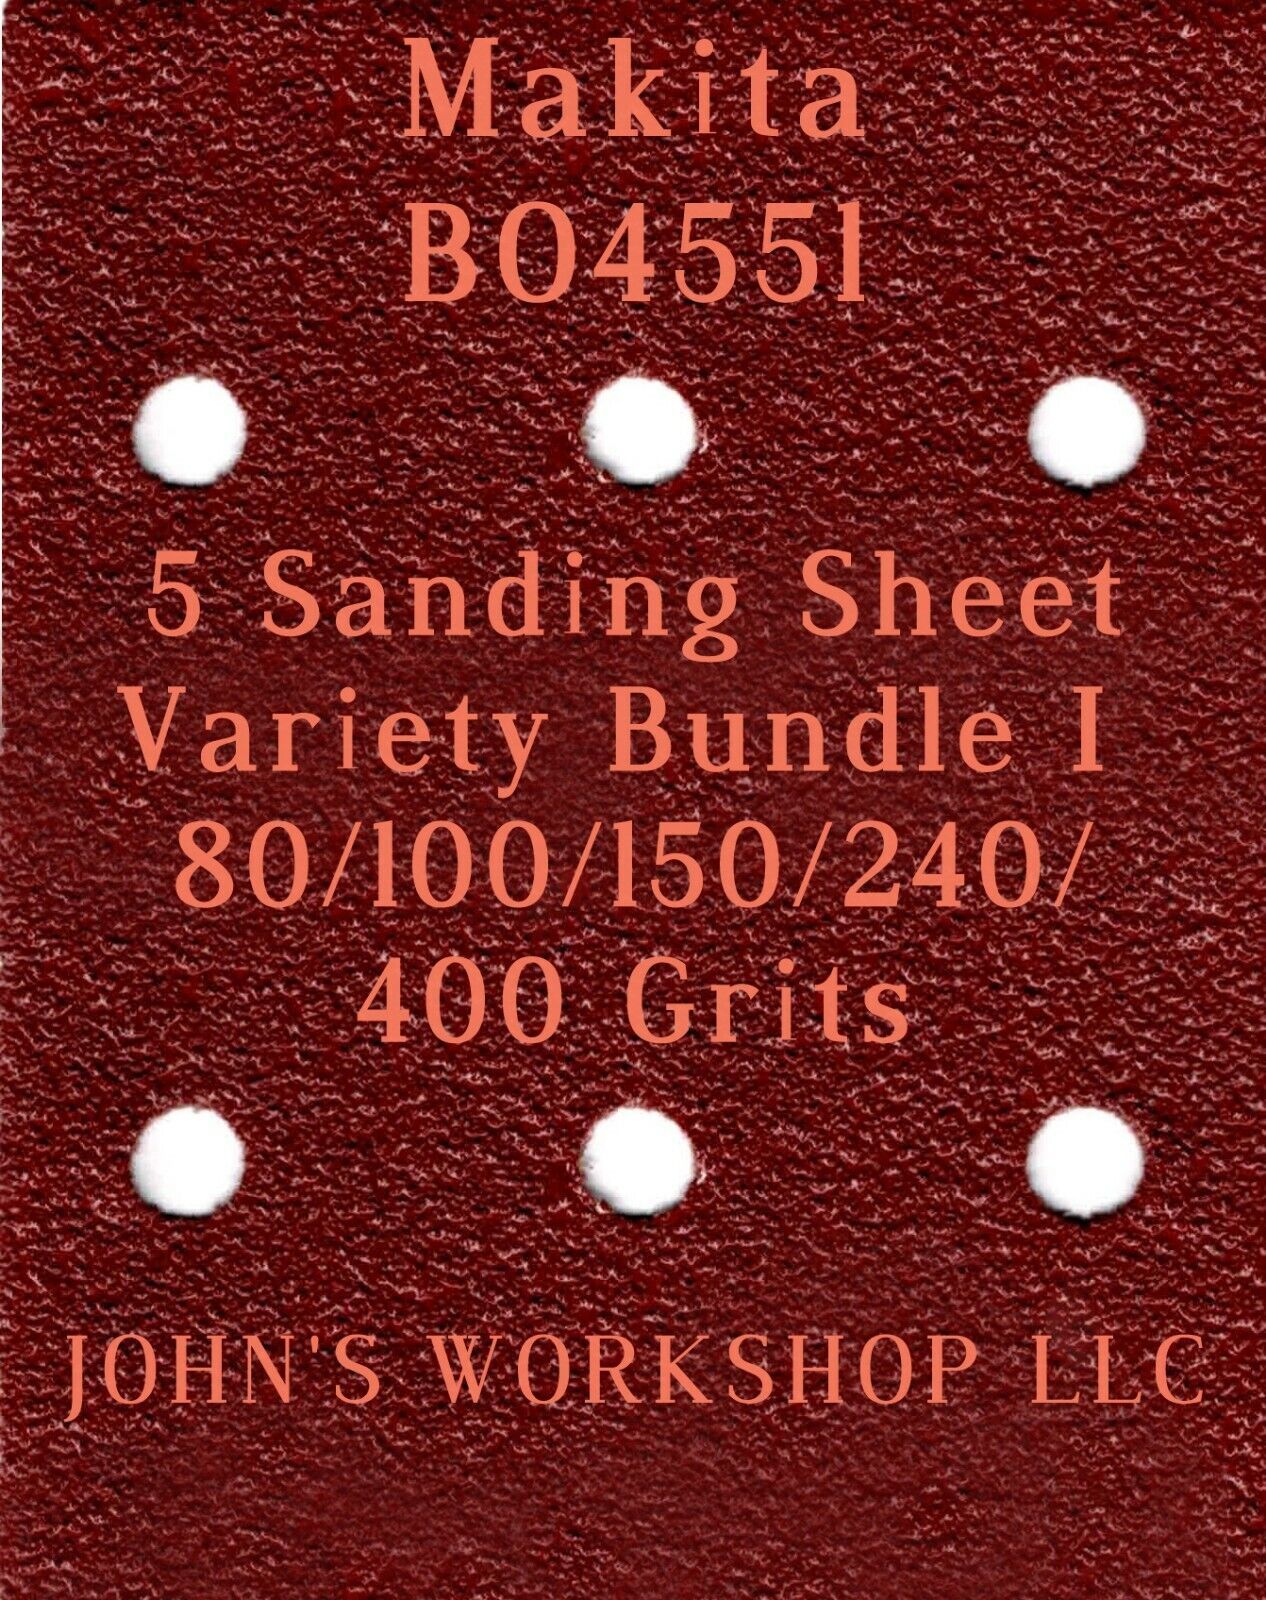 Makita BO4551 - 80/100/150/240/400 Grits - 5 Sandpaper Variety Bundle I - $4.99